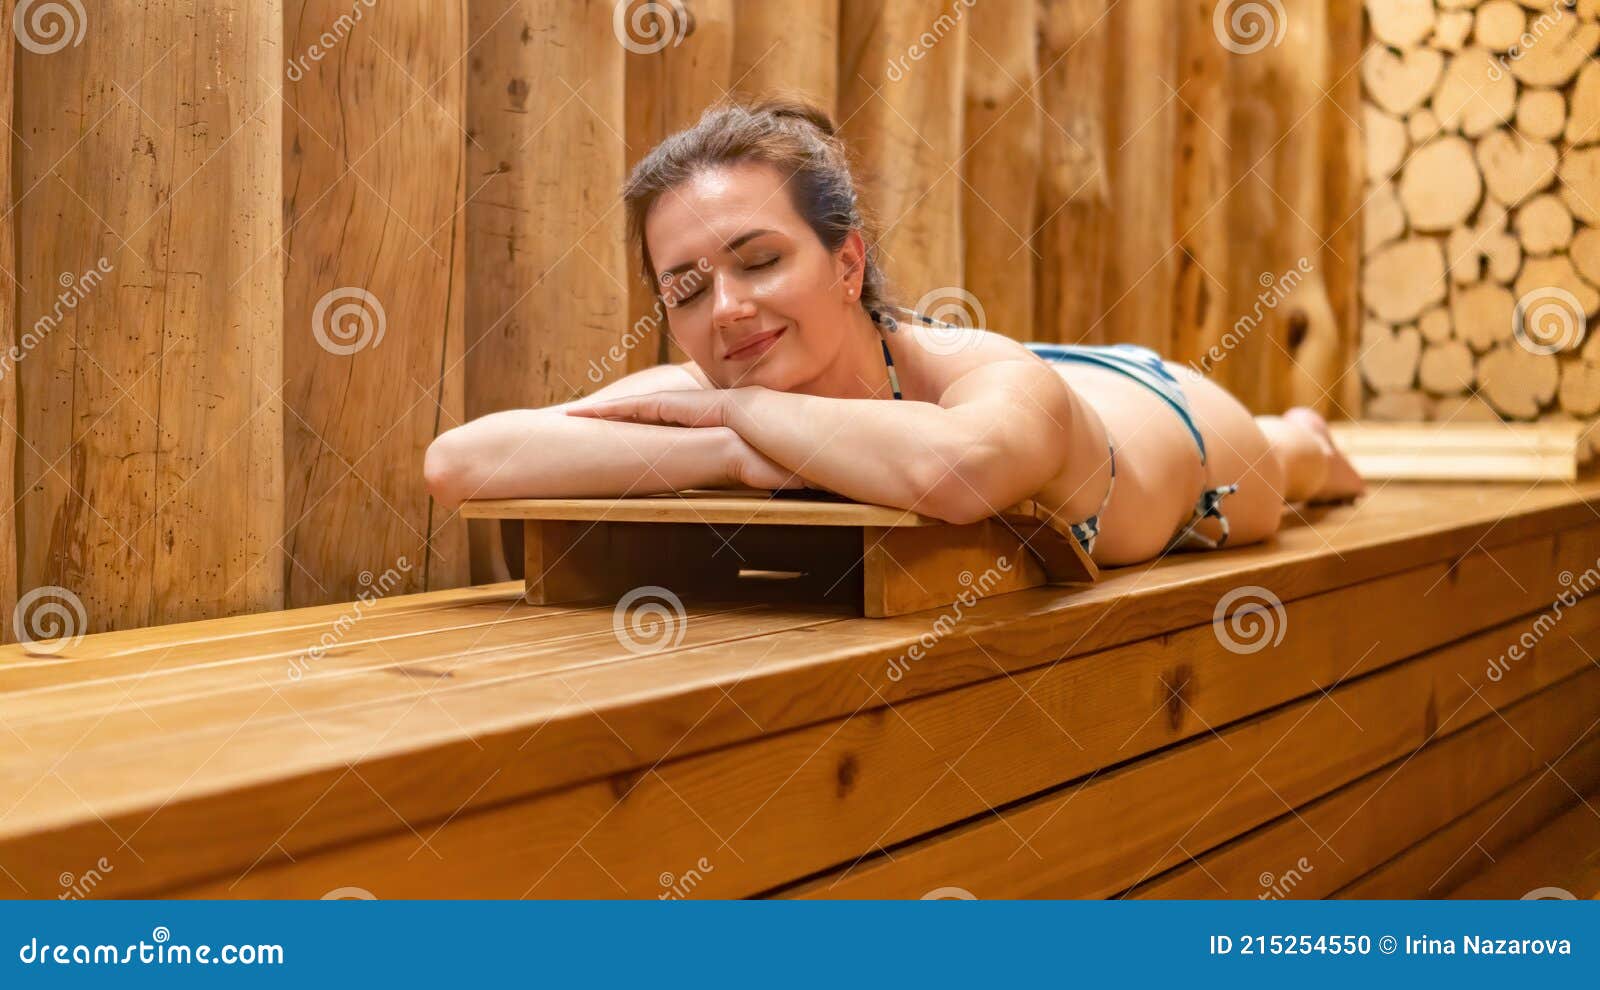 bea cimafranca add girls naked in sauna photo